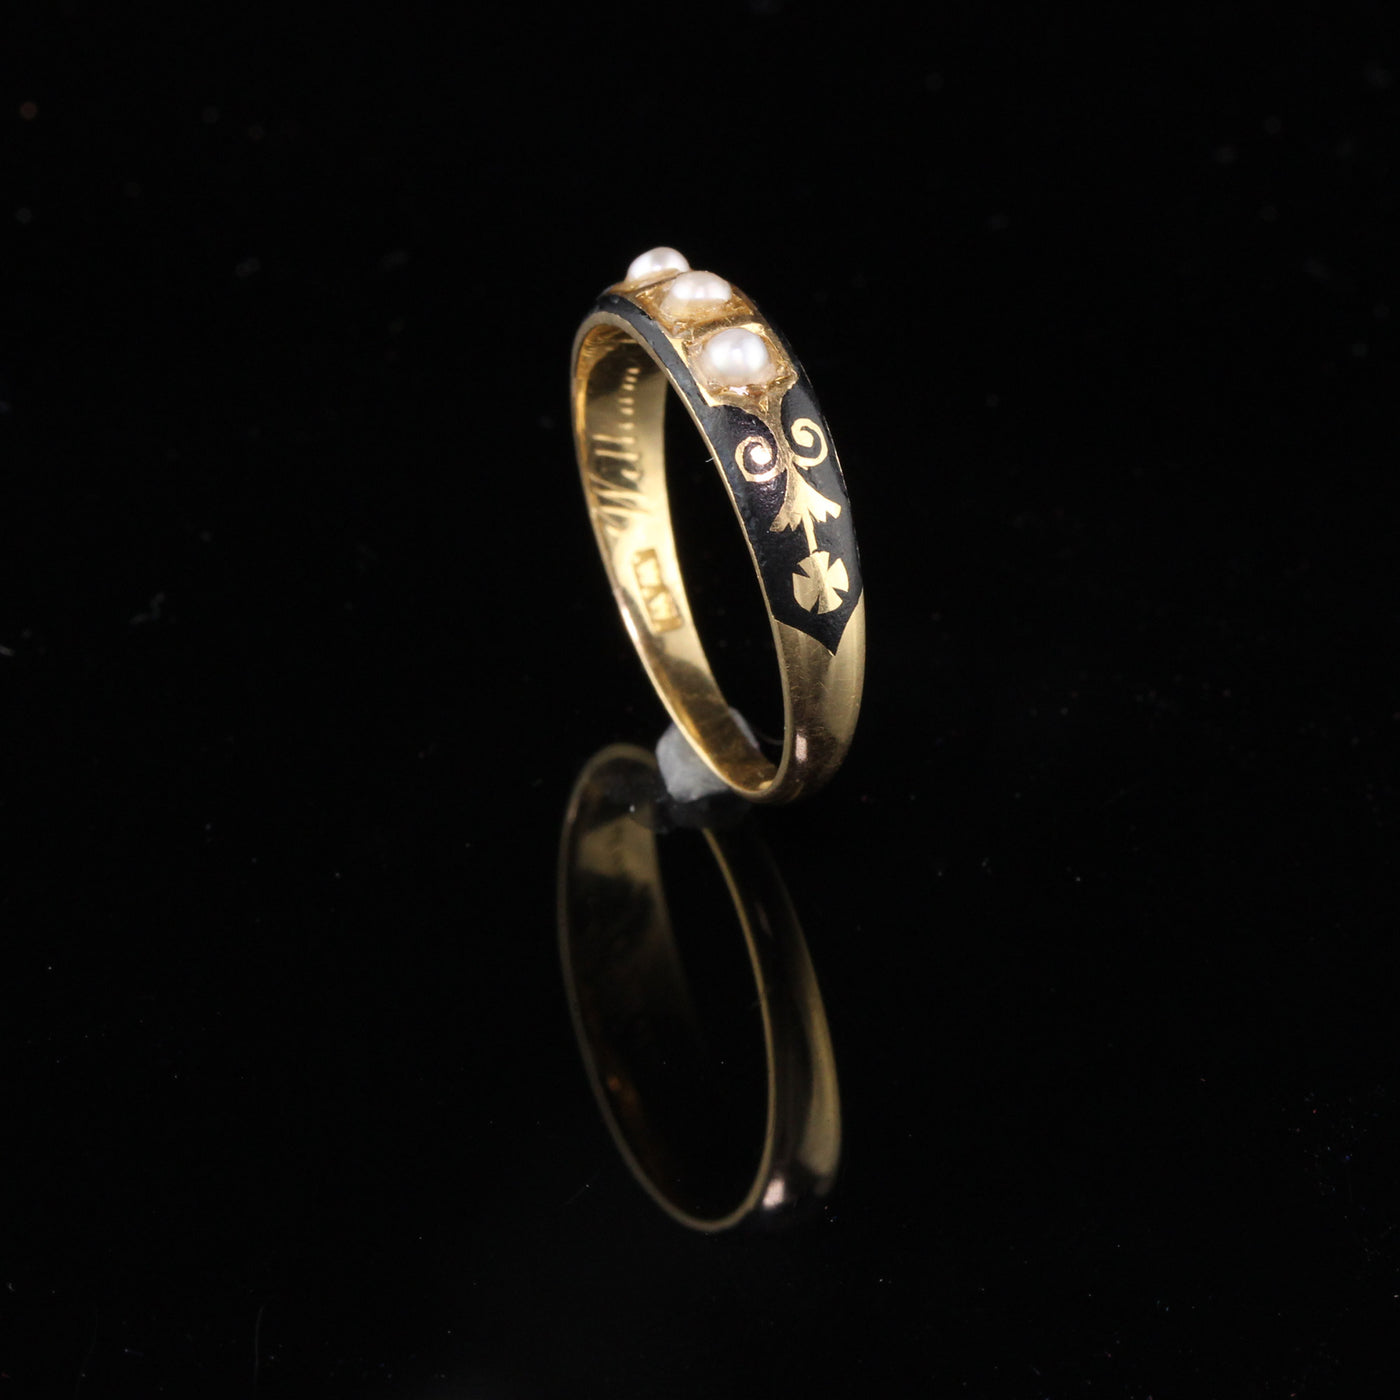 Circa 1836 - Antique Georgian 18K Yellow Gold Black Enamel & Pearl Mourning Band Ring - The Antique Parlour